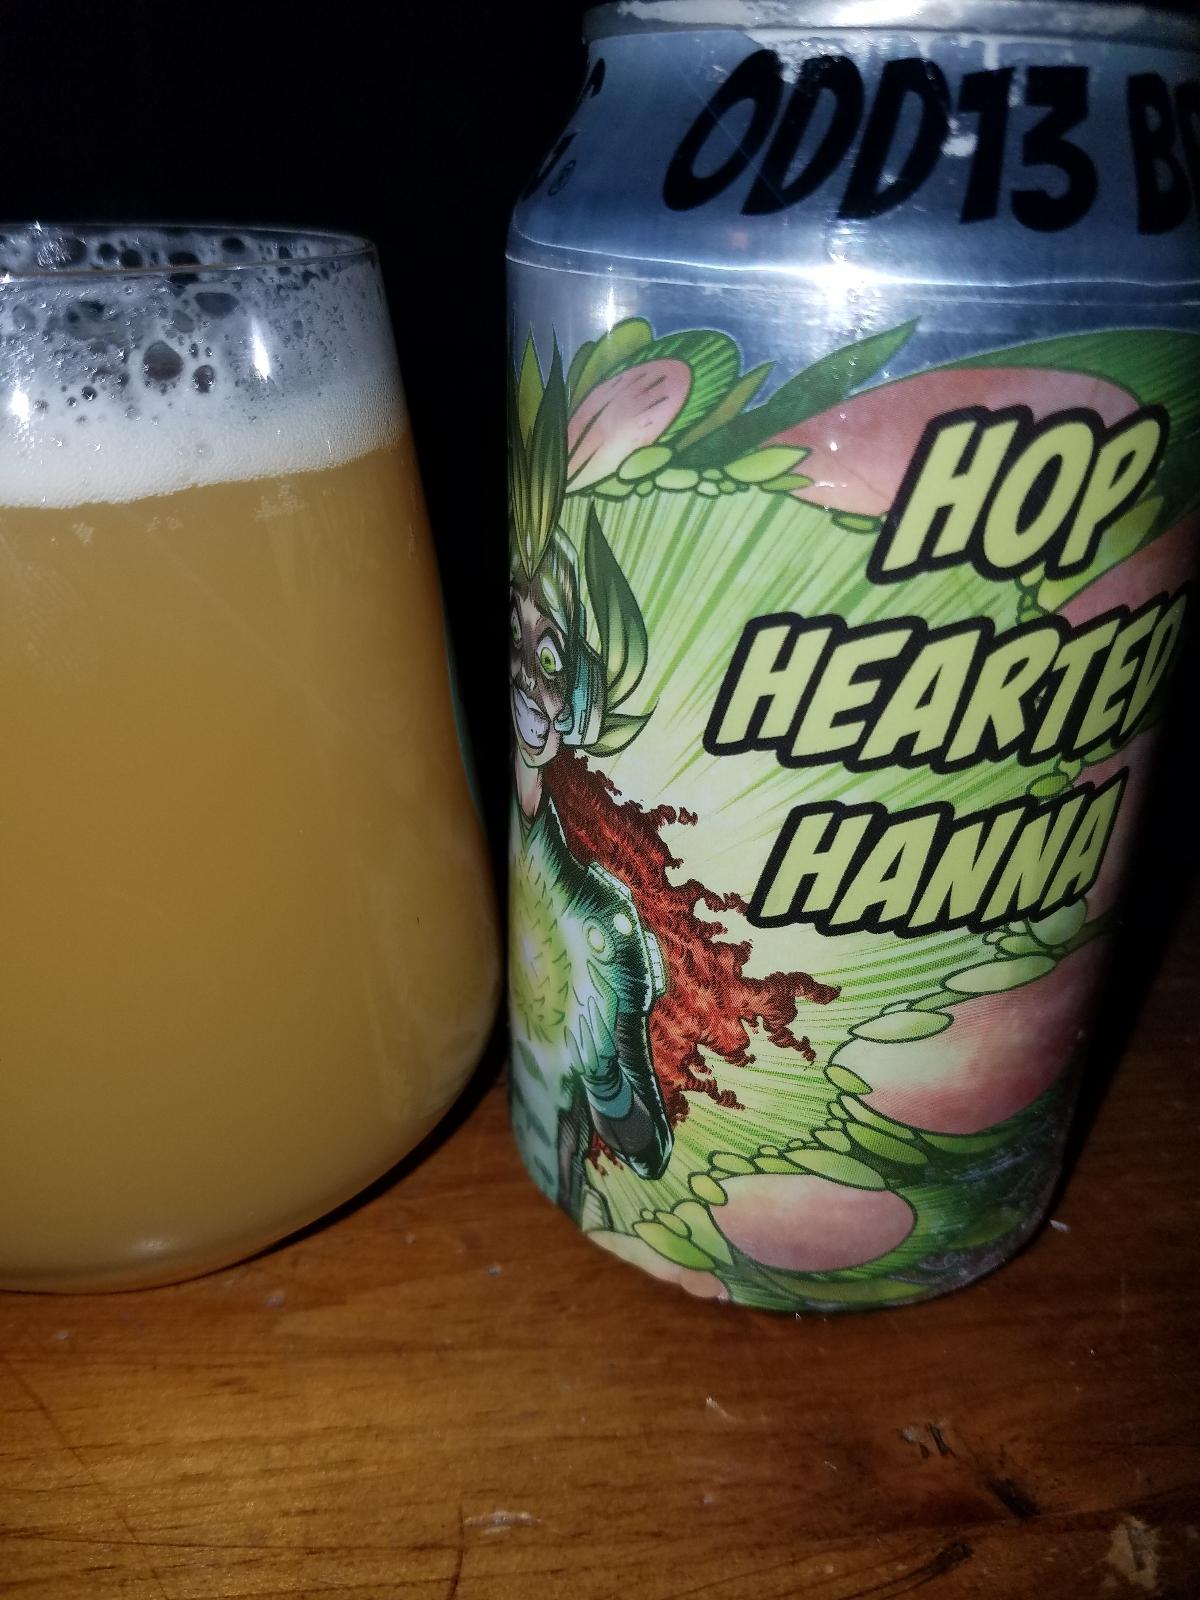 Hop Hearted Hanna 